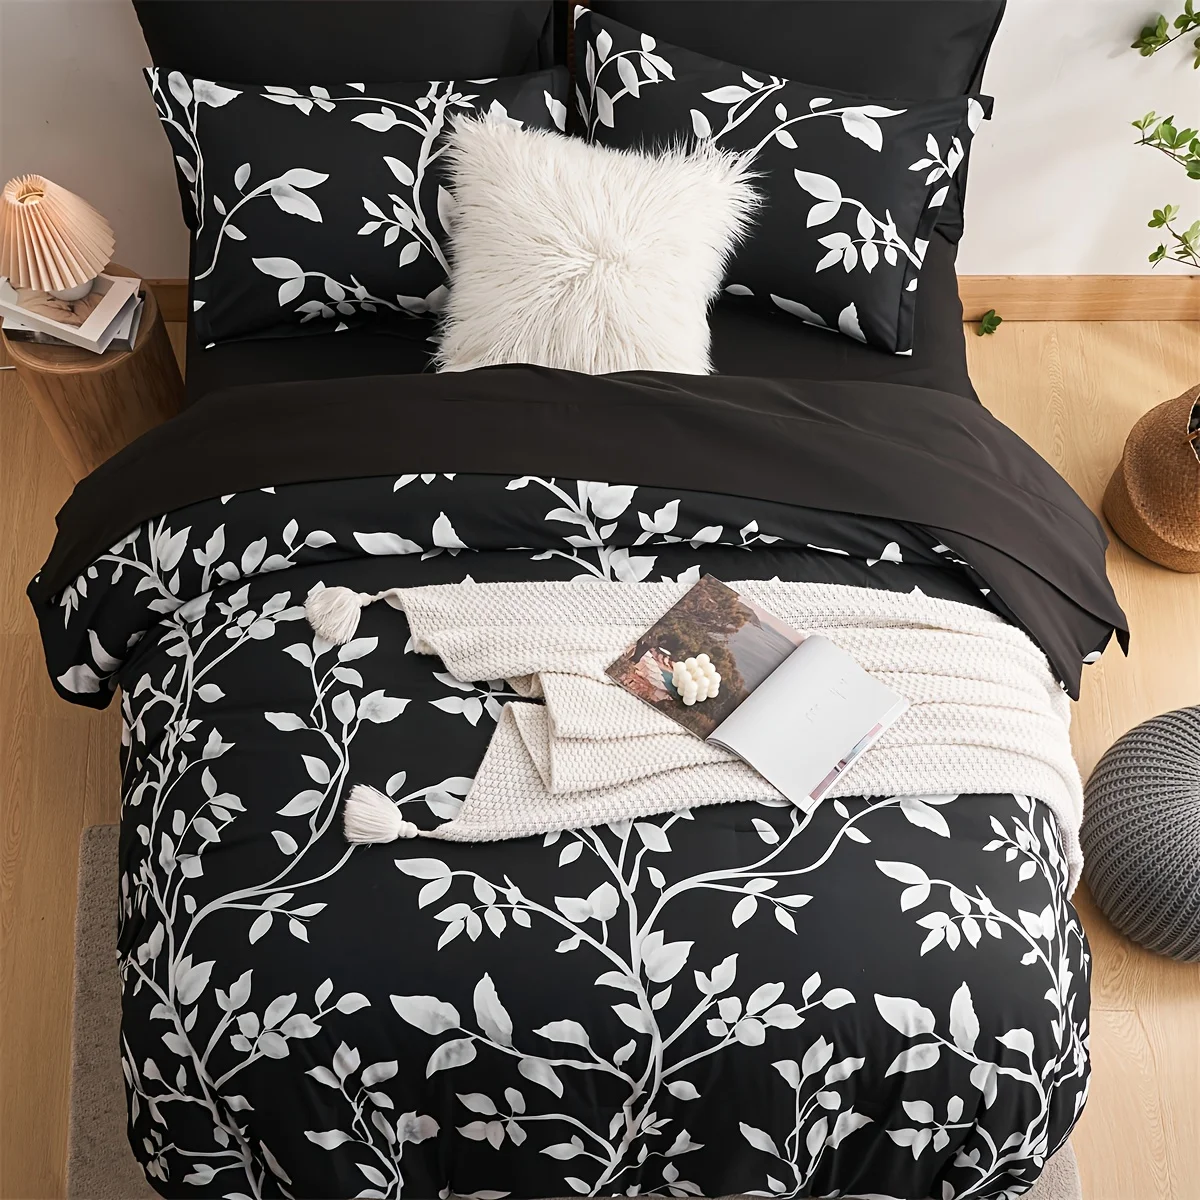 7pcs-black-white-floral-comforter-bedding-set-1-comforter-1-flat-sheet-1-fitted-sheet-4-pillowcase-without-filler-four